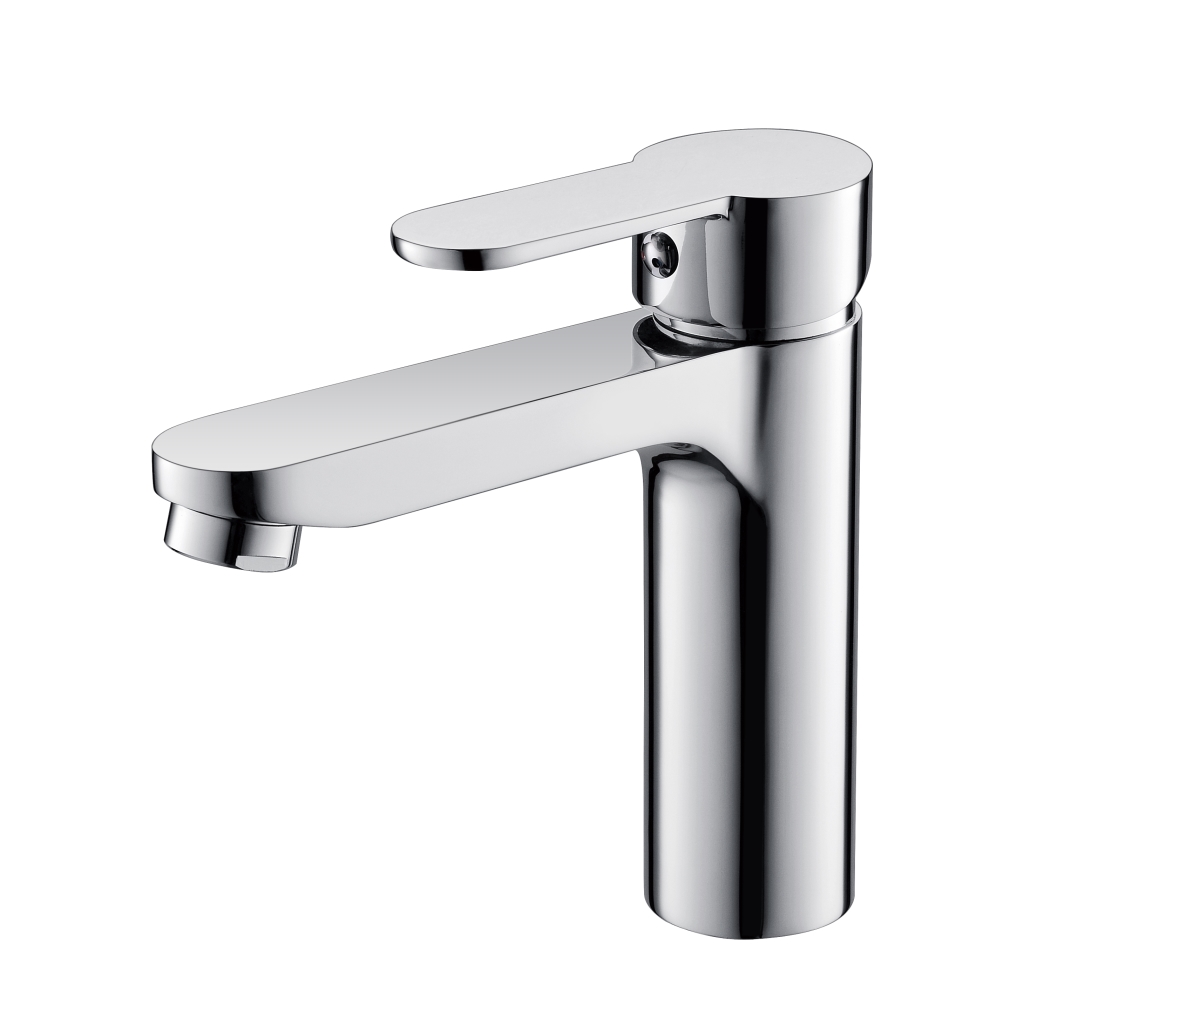 F40004 Bathroom Vessel Faucet, Chrome - 6.3 X 6.3 X 1.7 In.